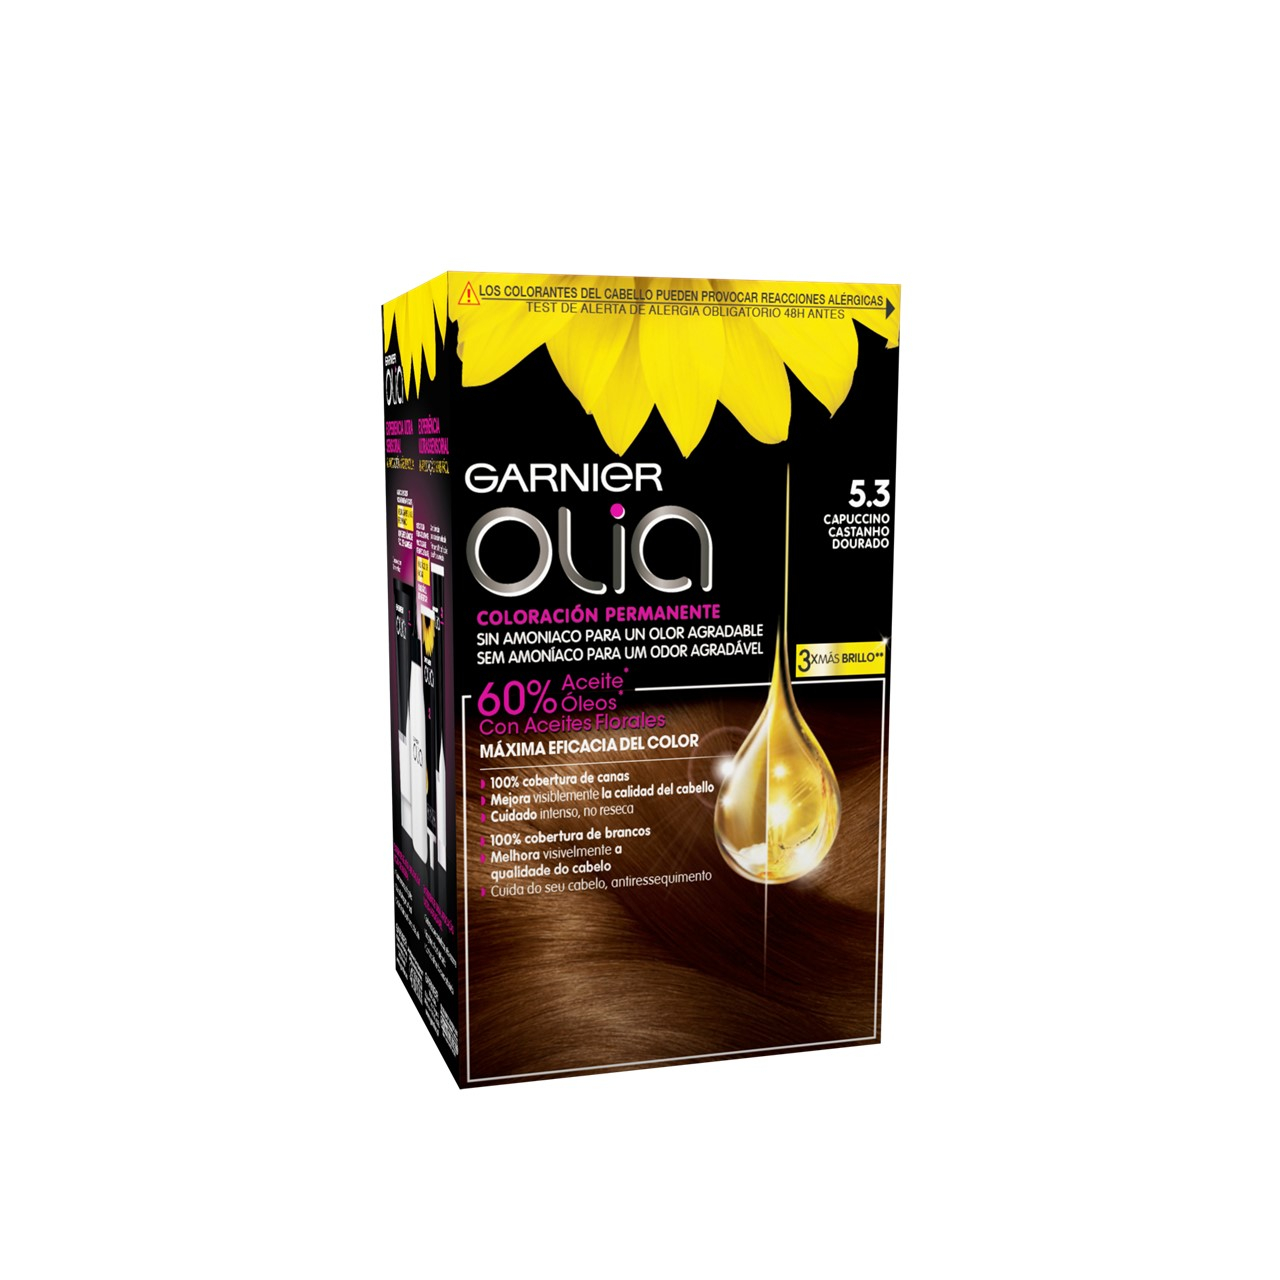 Garnier Olia 5.3 Permanent Hair Dye